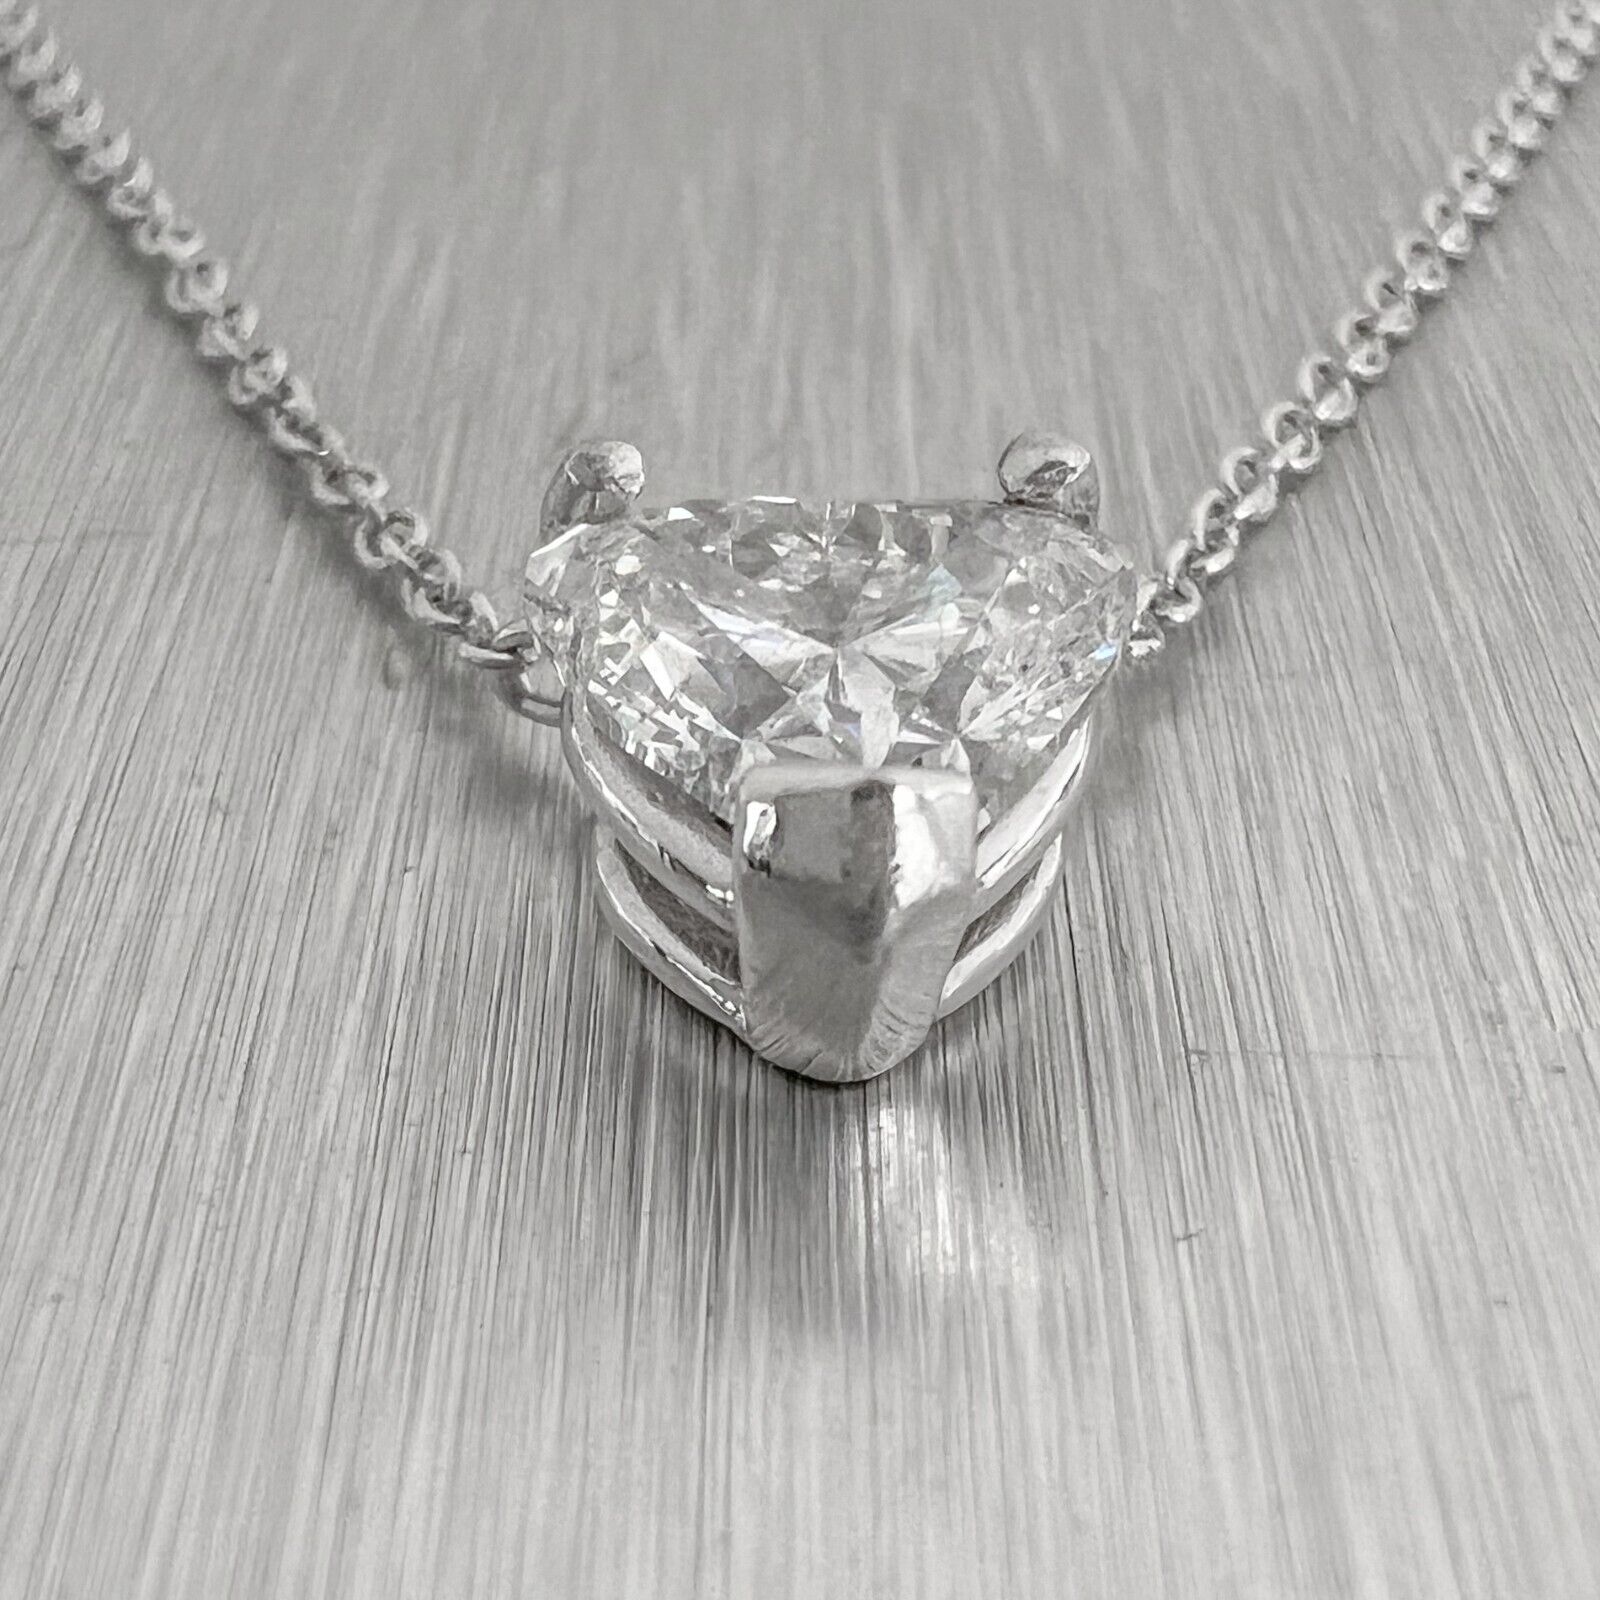 18K White Gold Diamond Heart Lock Necklace